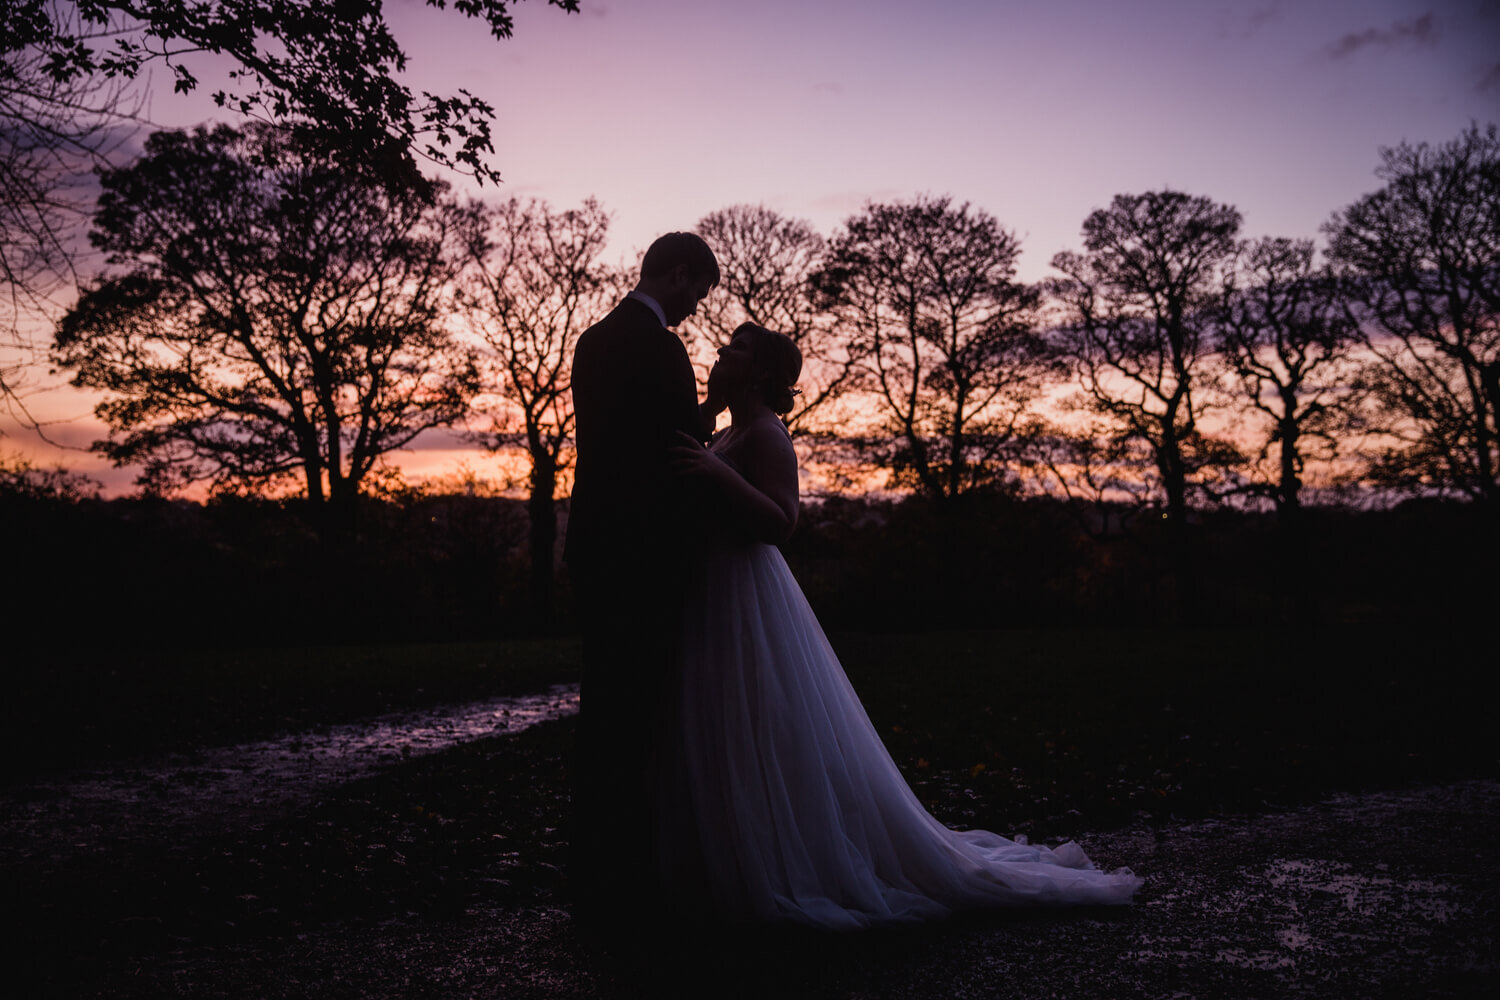 sunset silhouette exposure photograph of newlyweds